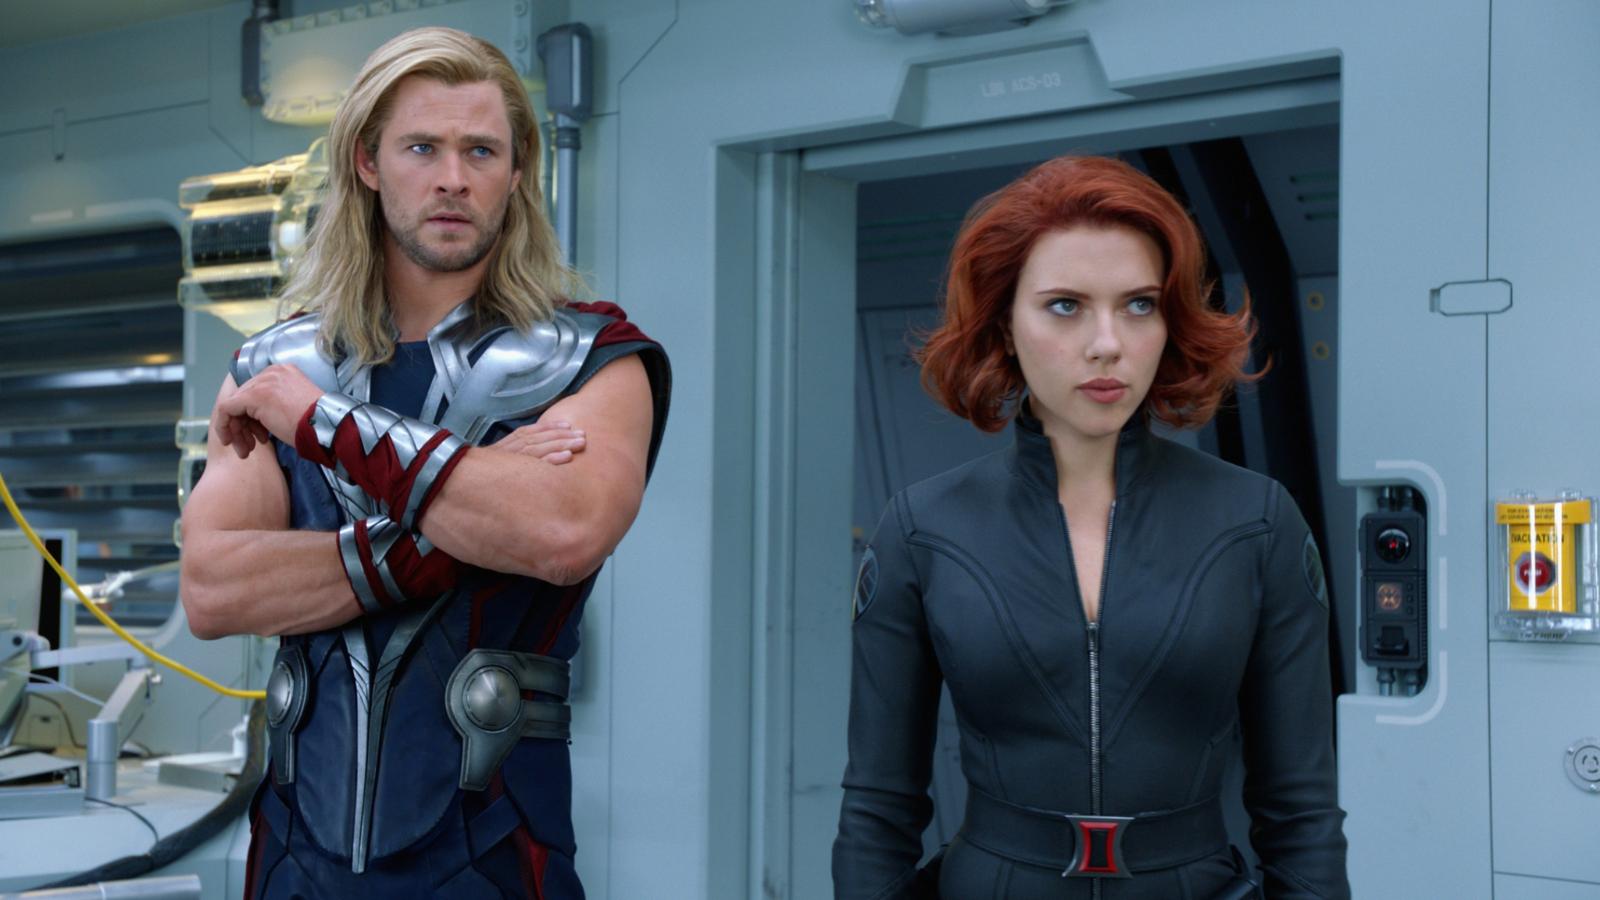 Chris Hemsworth as Thor and Scarlett Johansson as Black Widow in Avengers